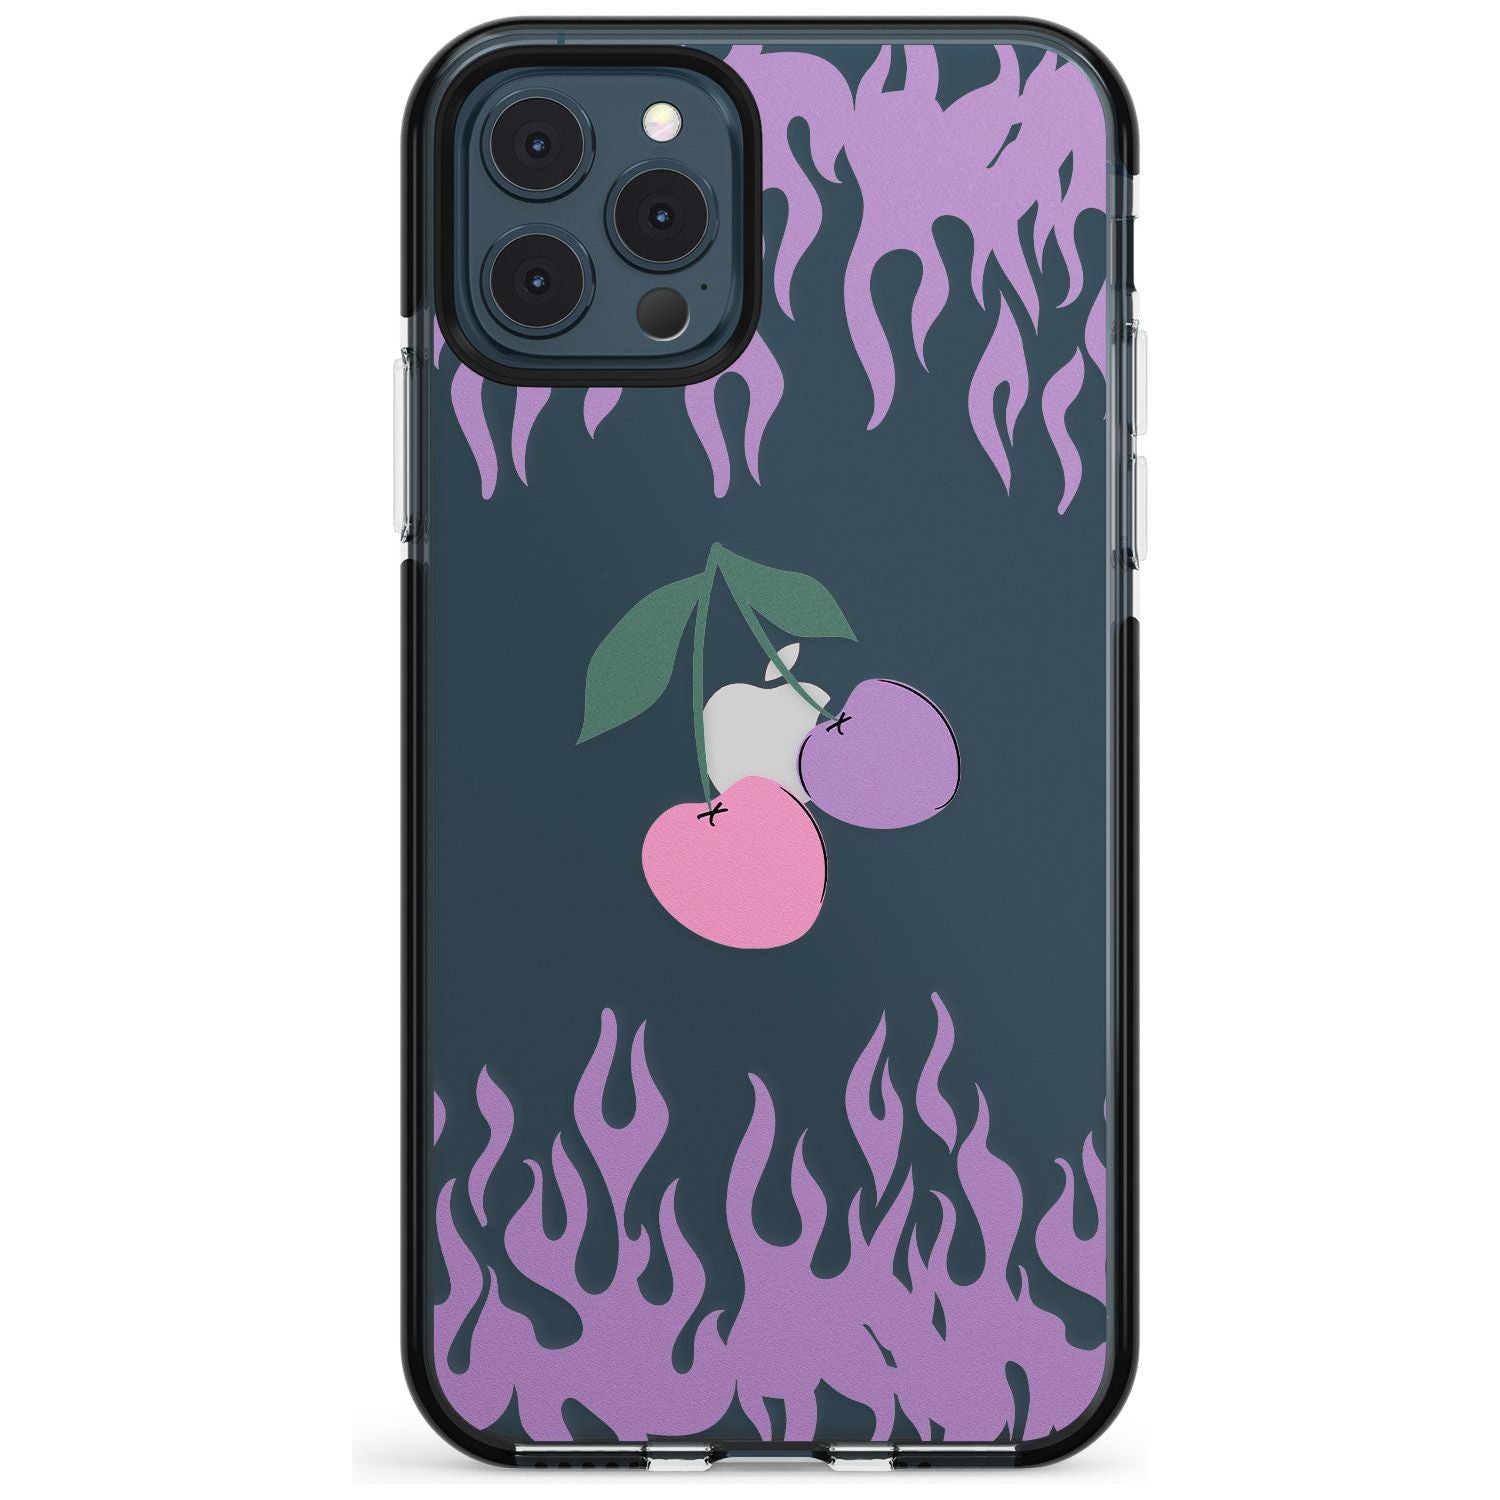 Cherries n' Flames Black Impact Phone Case for iPhone 11